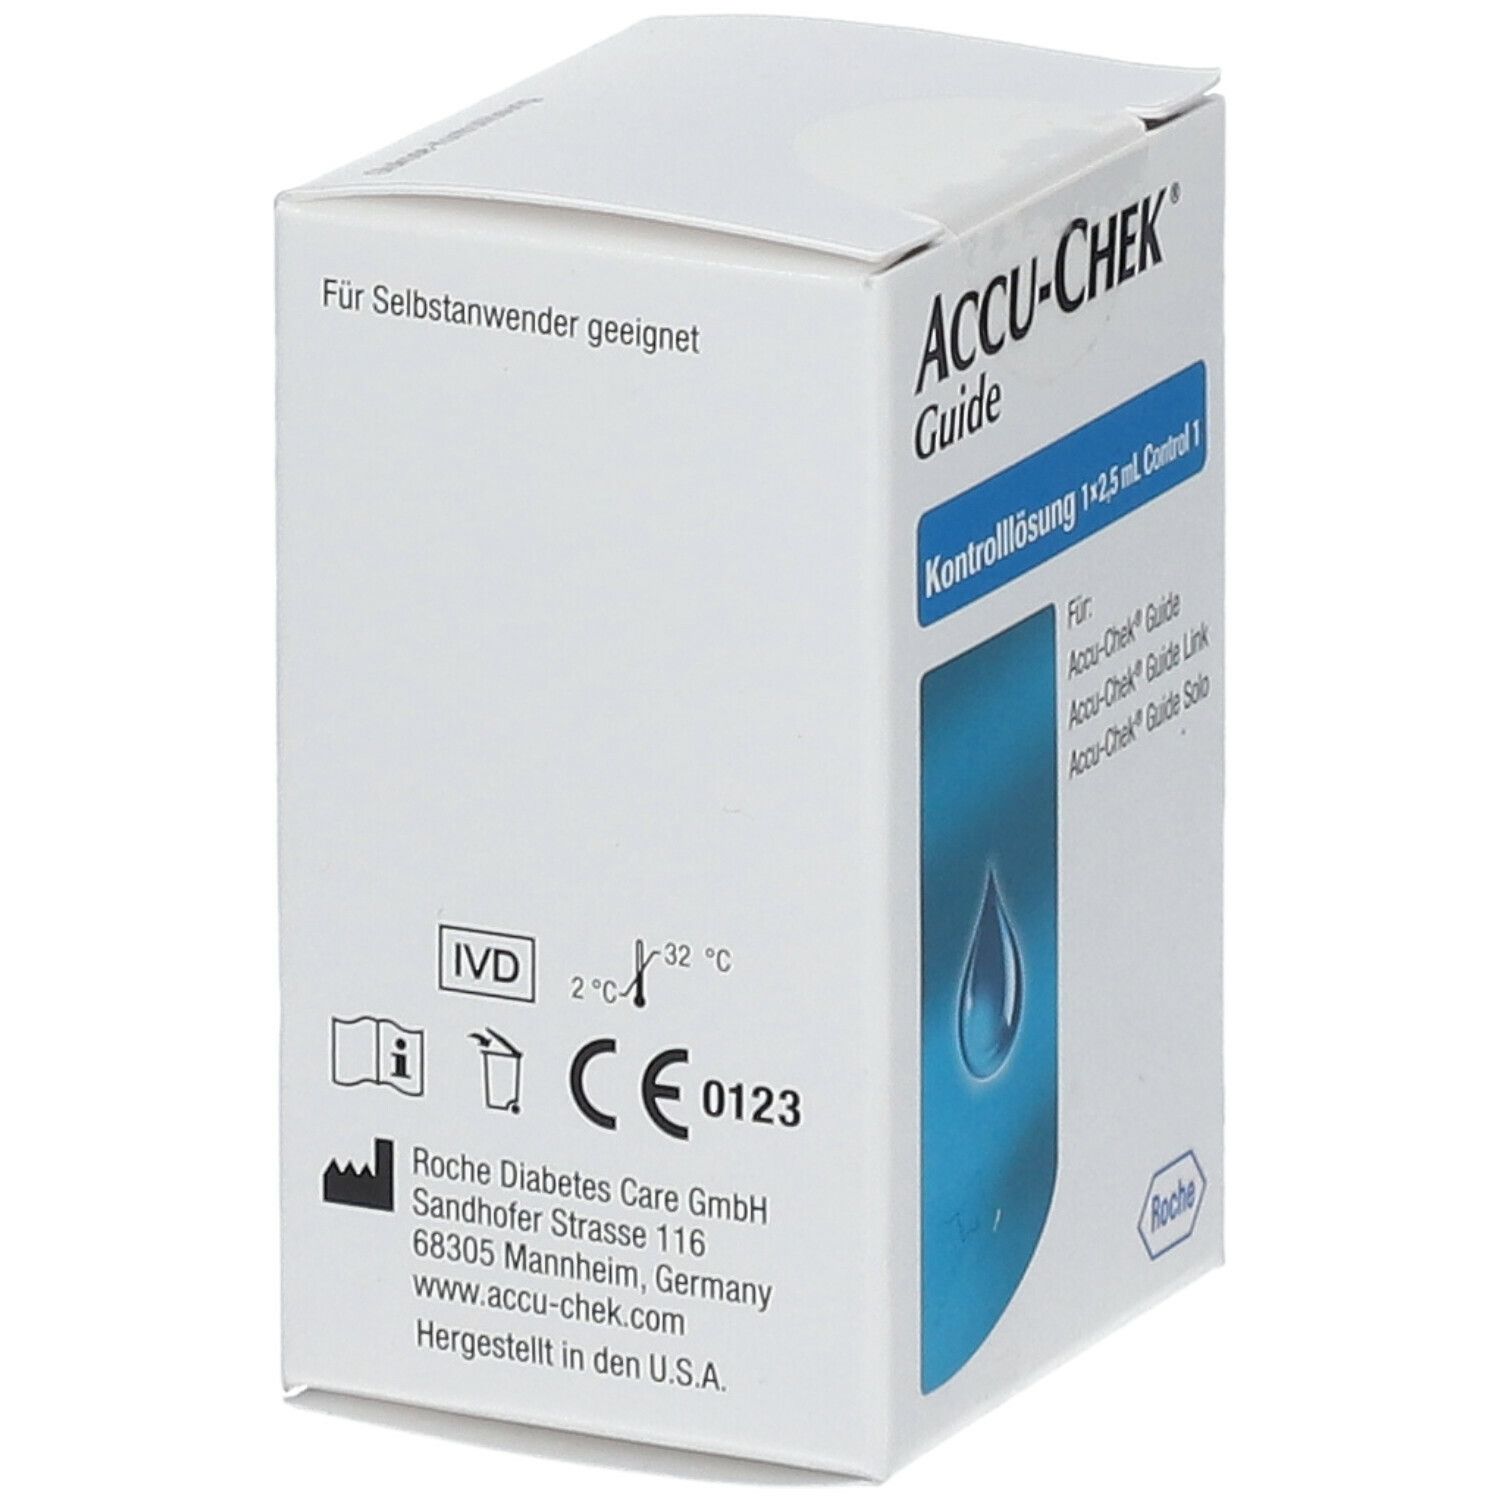 ACCU-CHEK Guide Glukose-Kontrolllösung